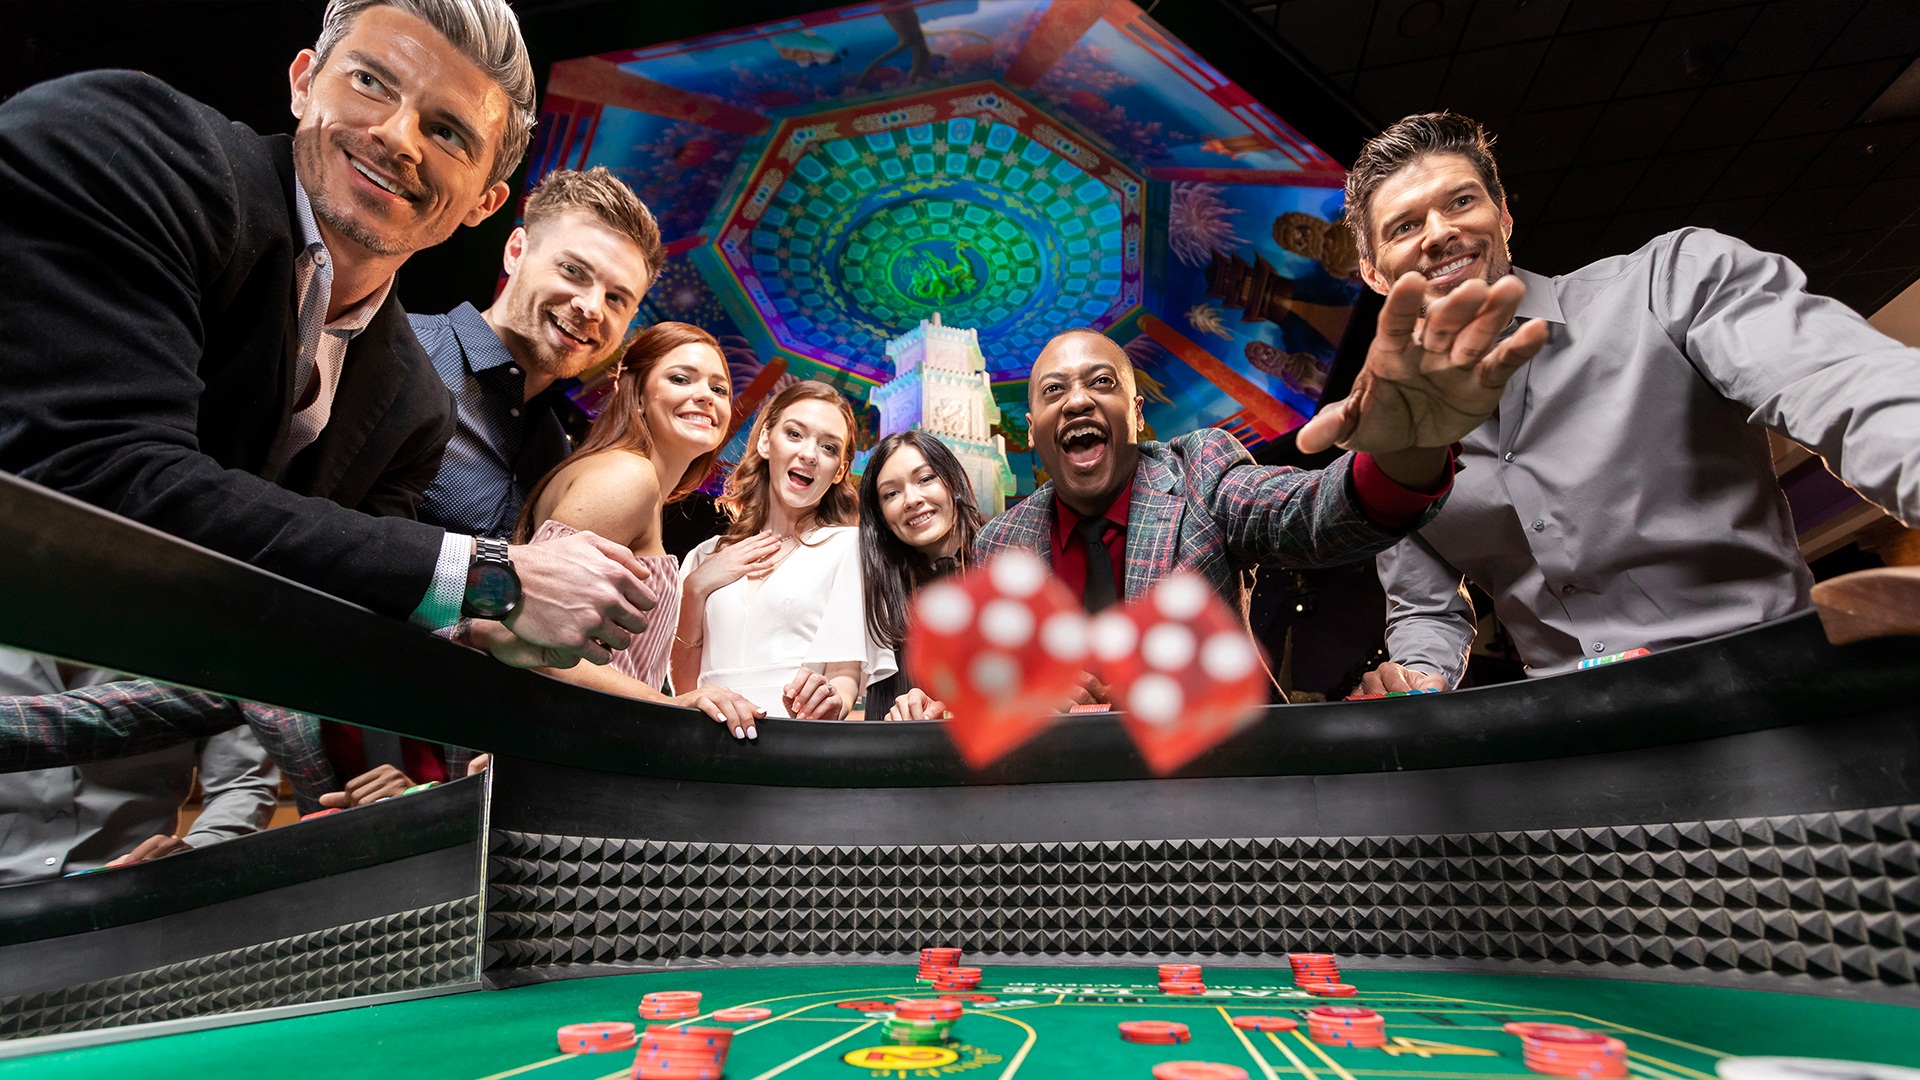 How do casinos help arrange corporate events?